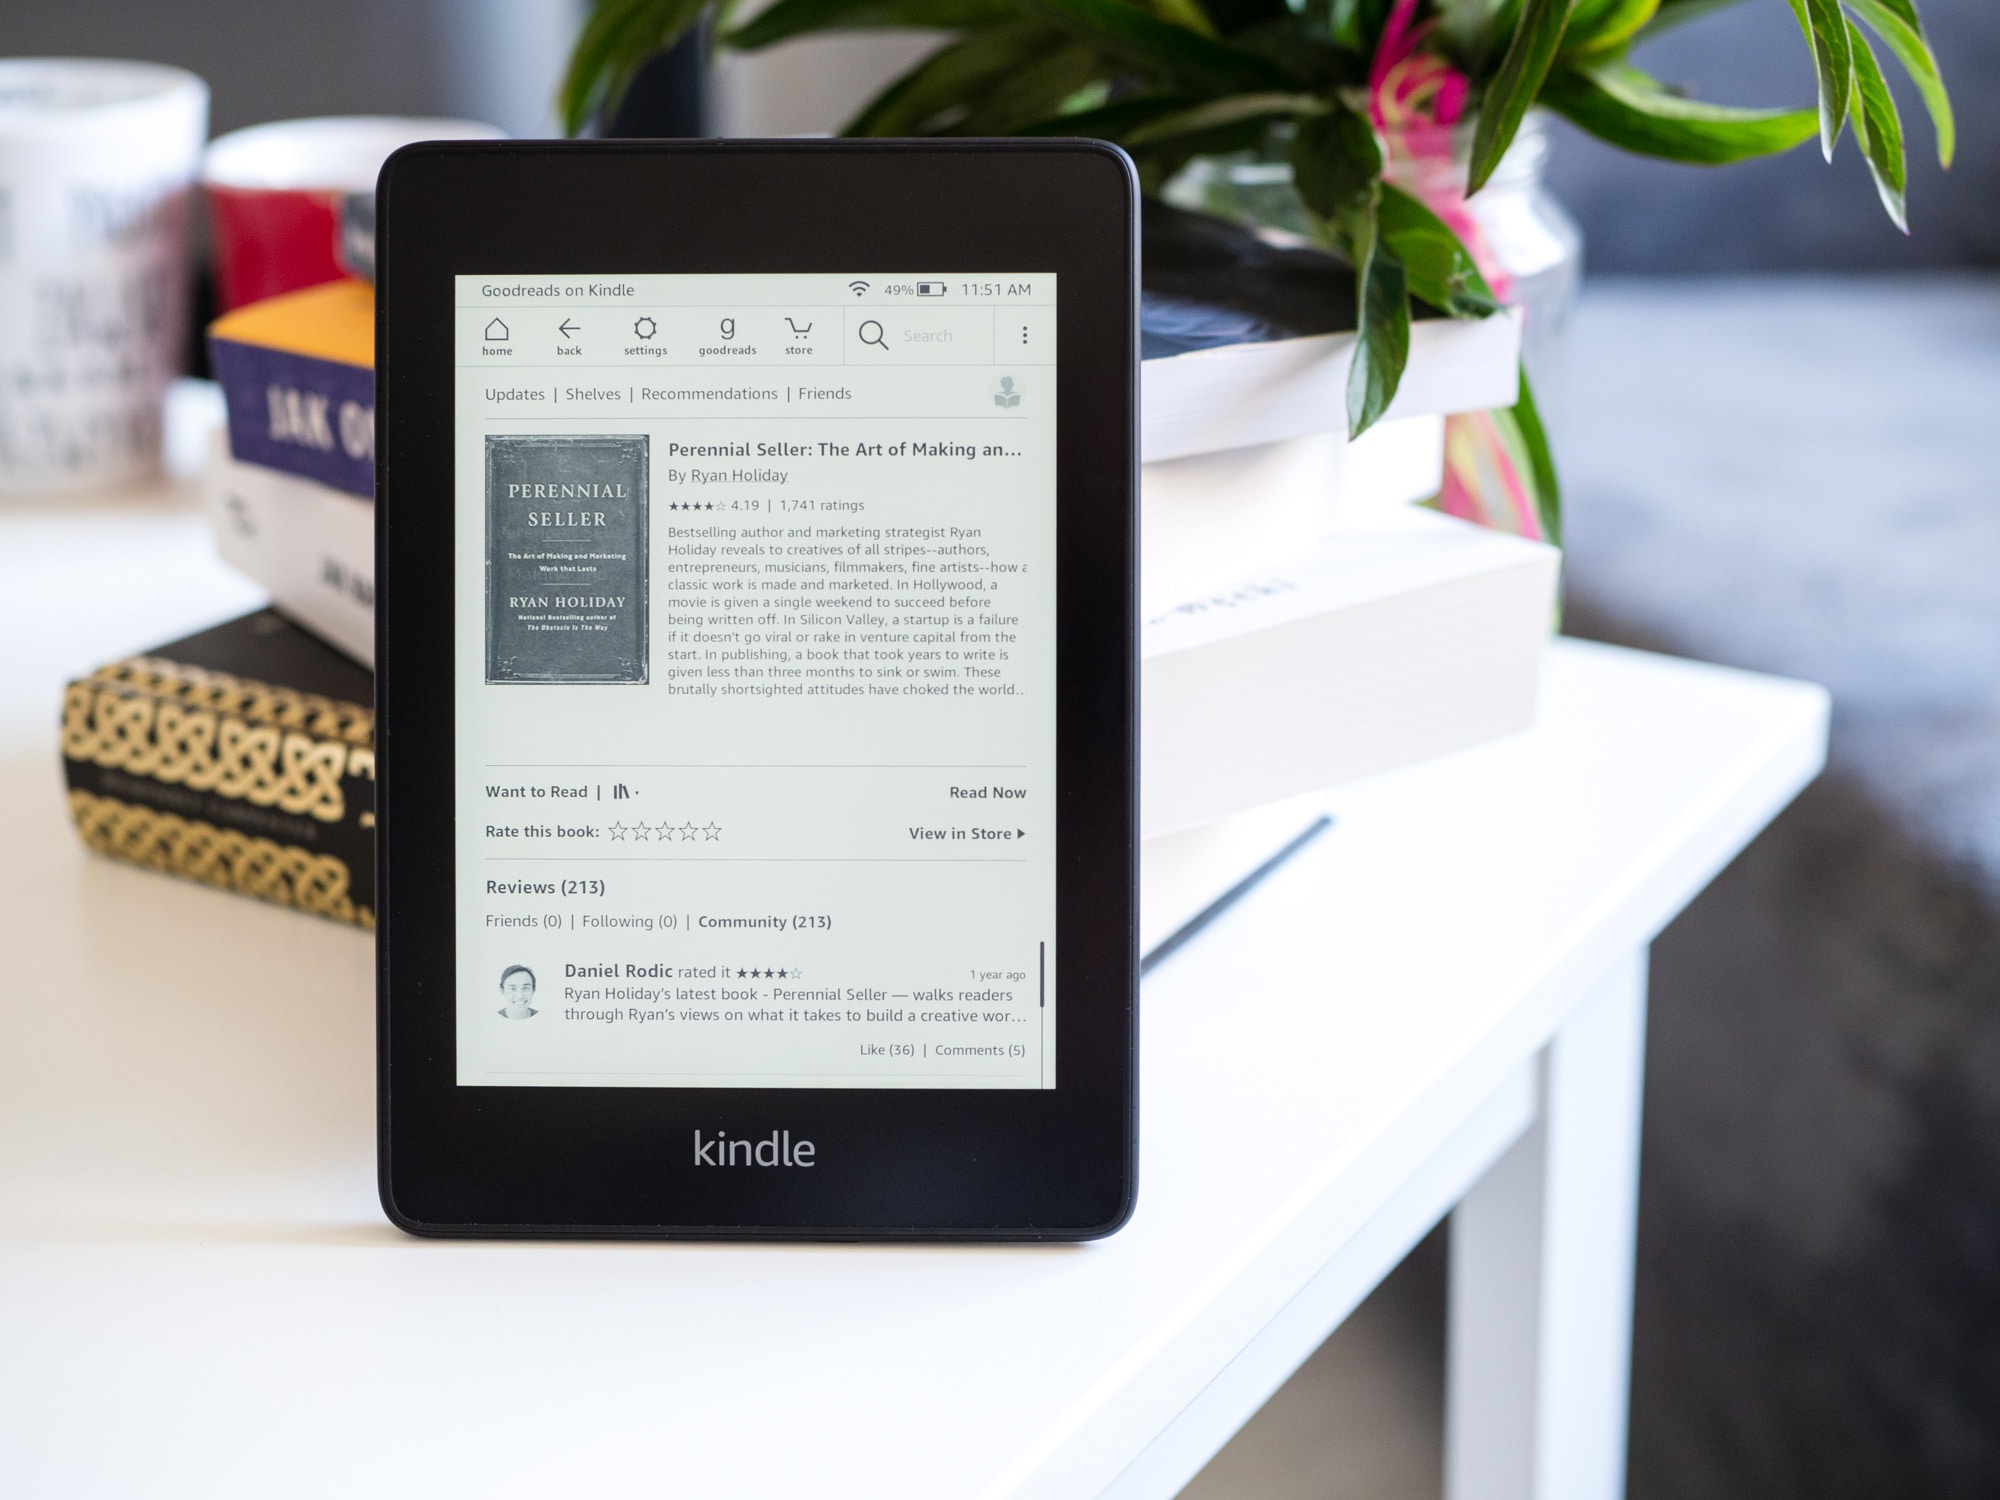 How To Watch Amazon Prime On Kindle